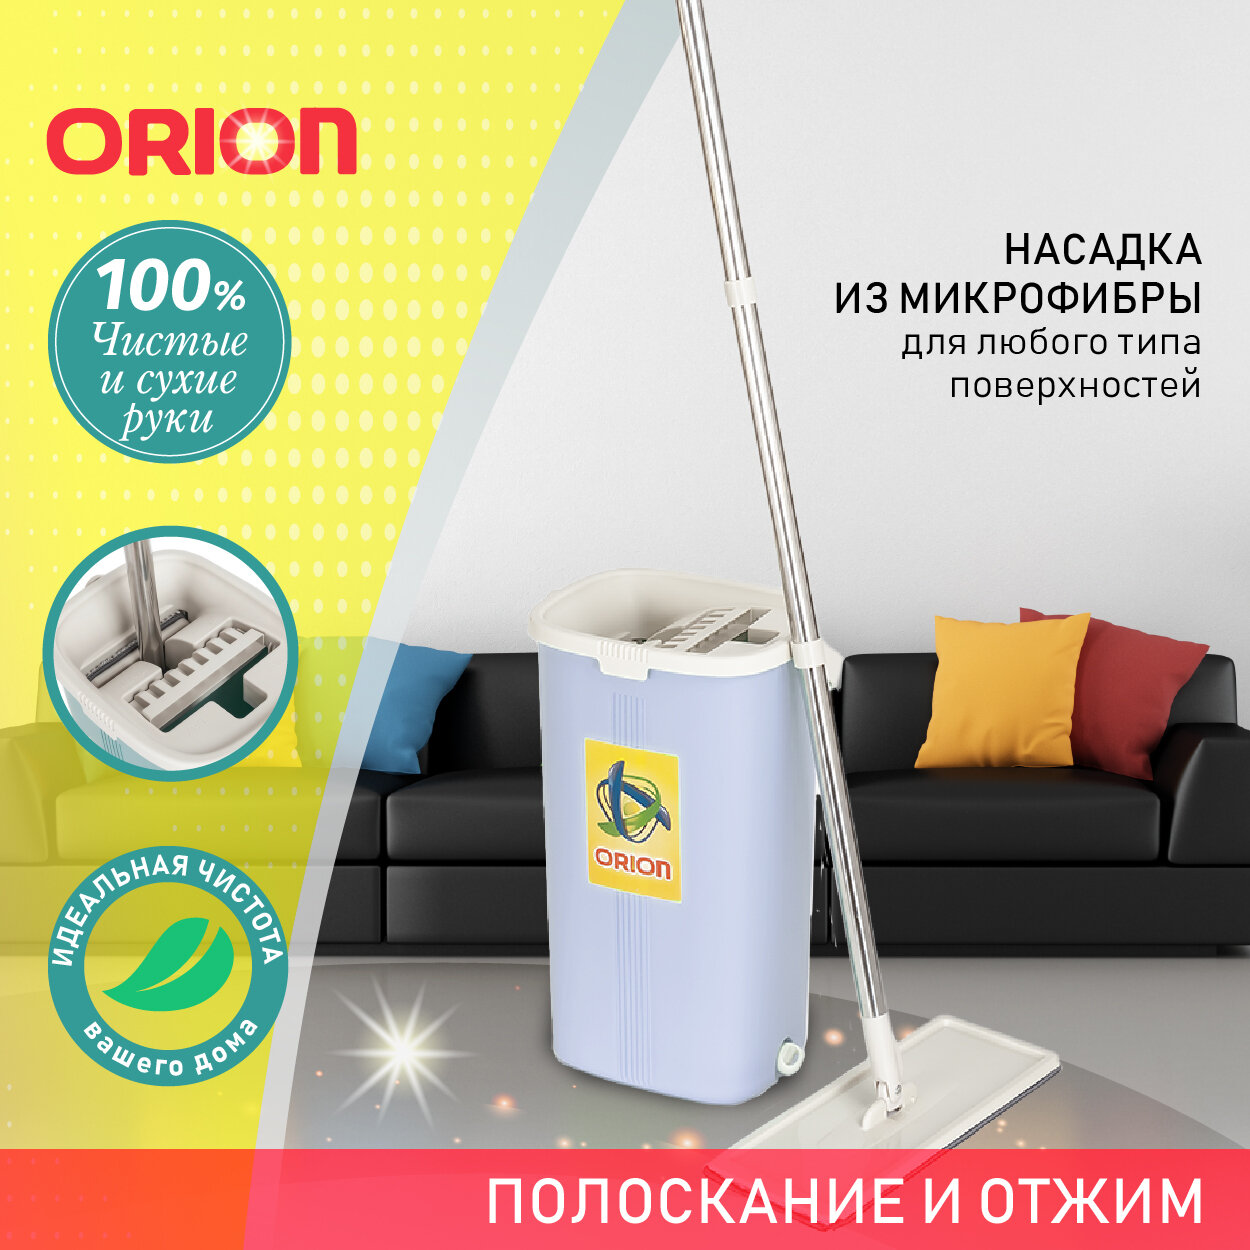 Набор для уборки ORION 2145 2 в 1, умная швабра + ведро с функцией полоскания и отжима